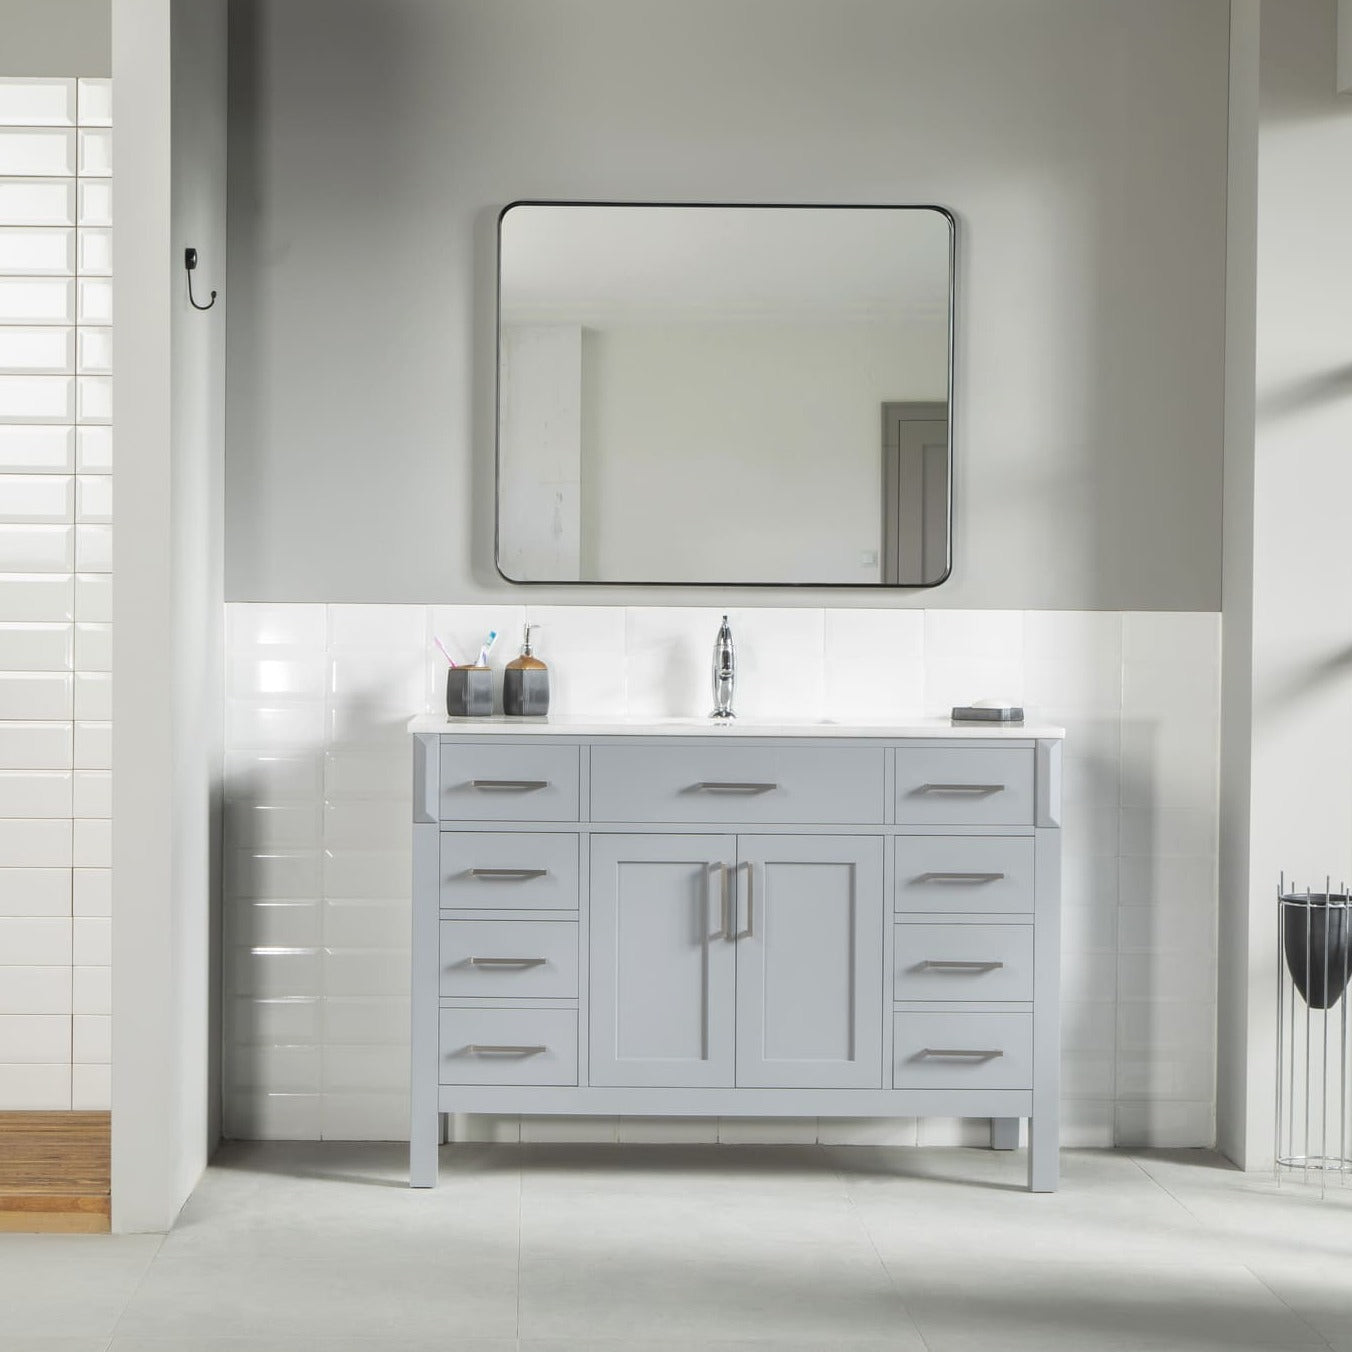 Fawna Bathroom Vanity Homelero 48"  #size_48"  #color_grey  #hardware_brushed nickel